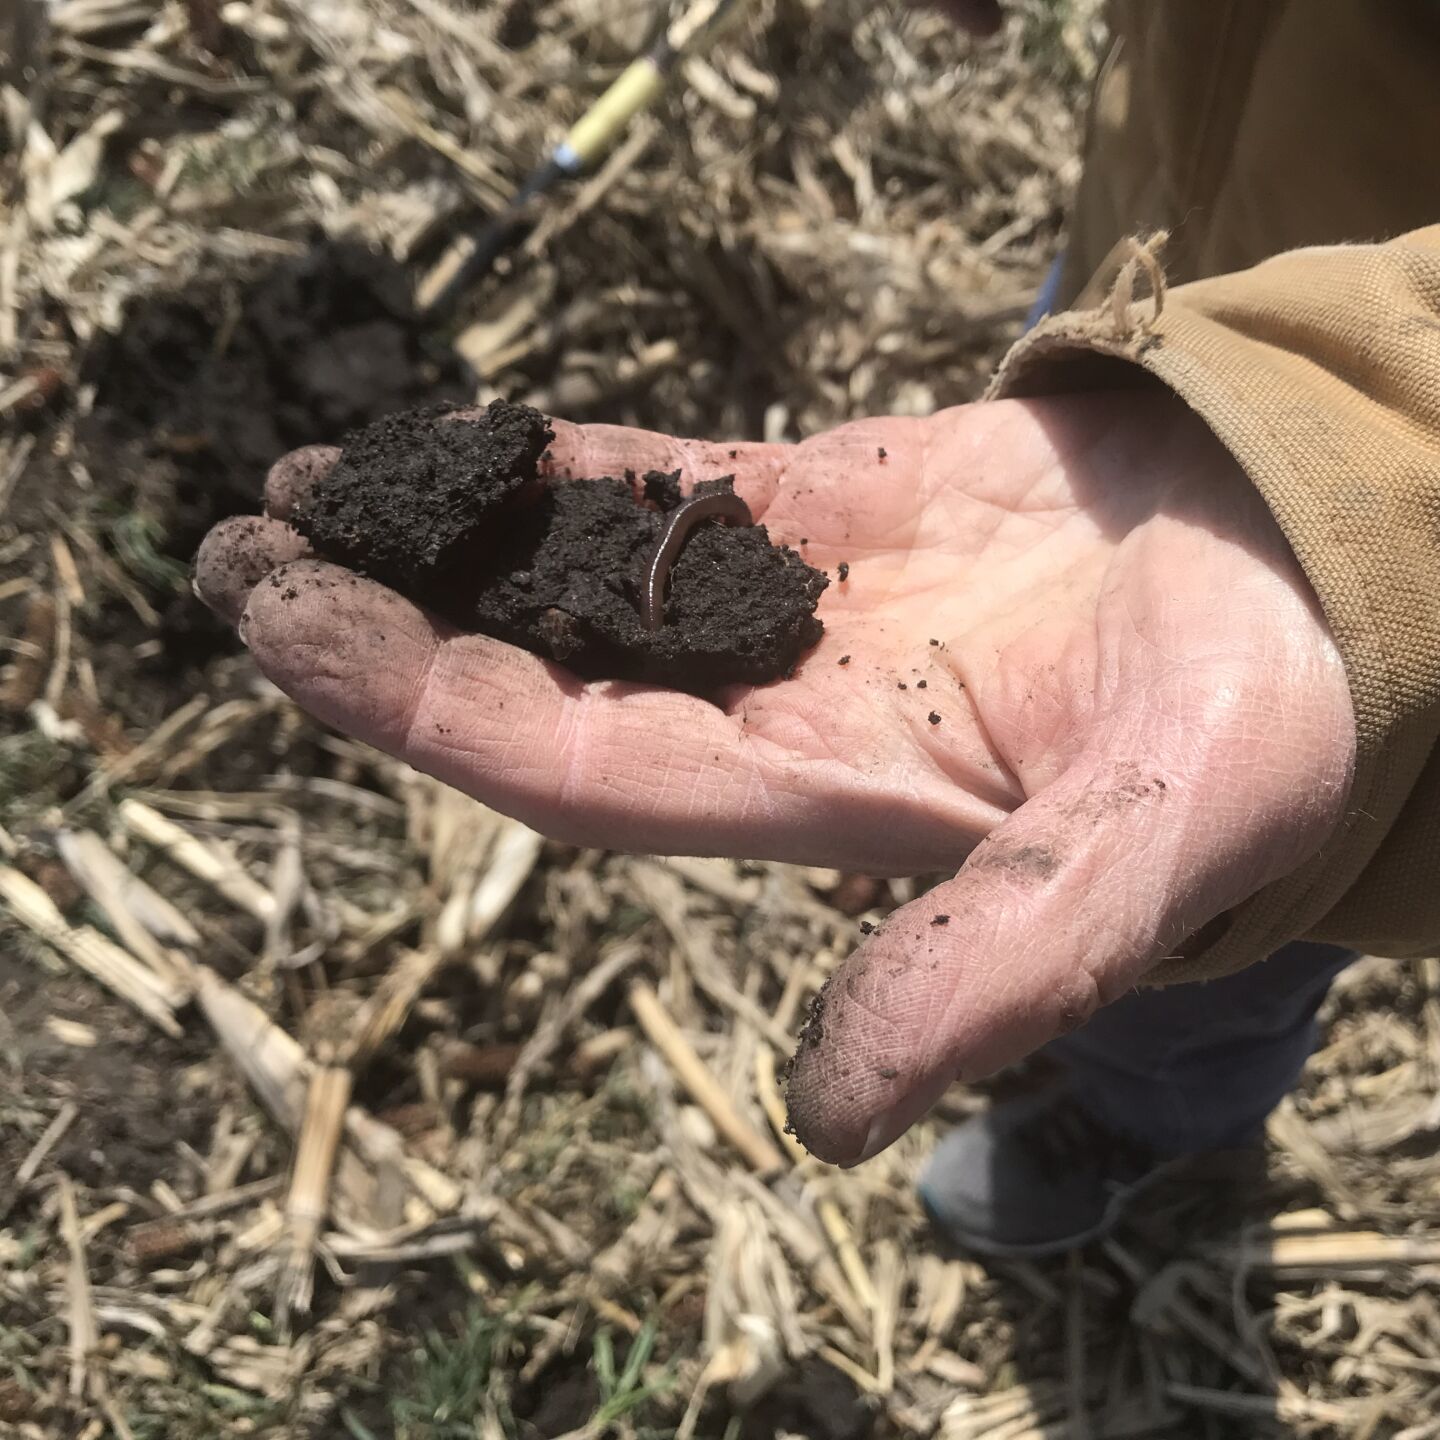 Soil in hand (Journal photo)